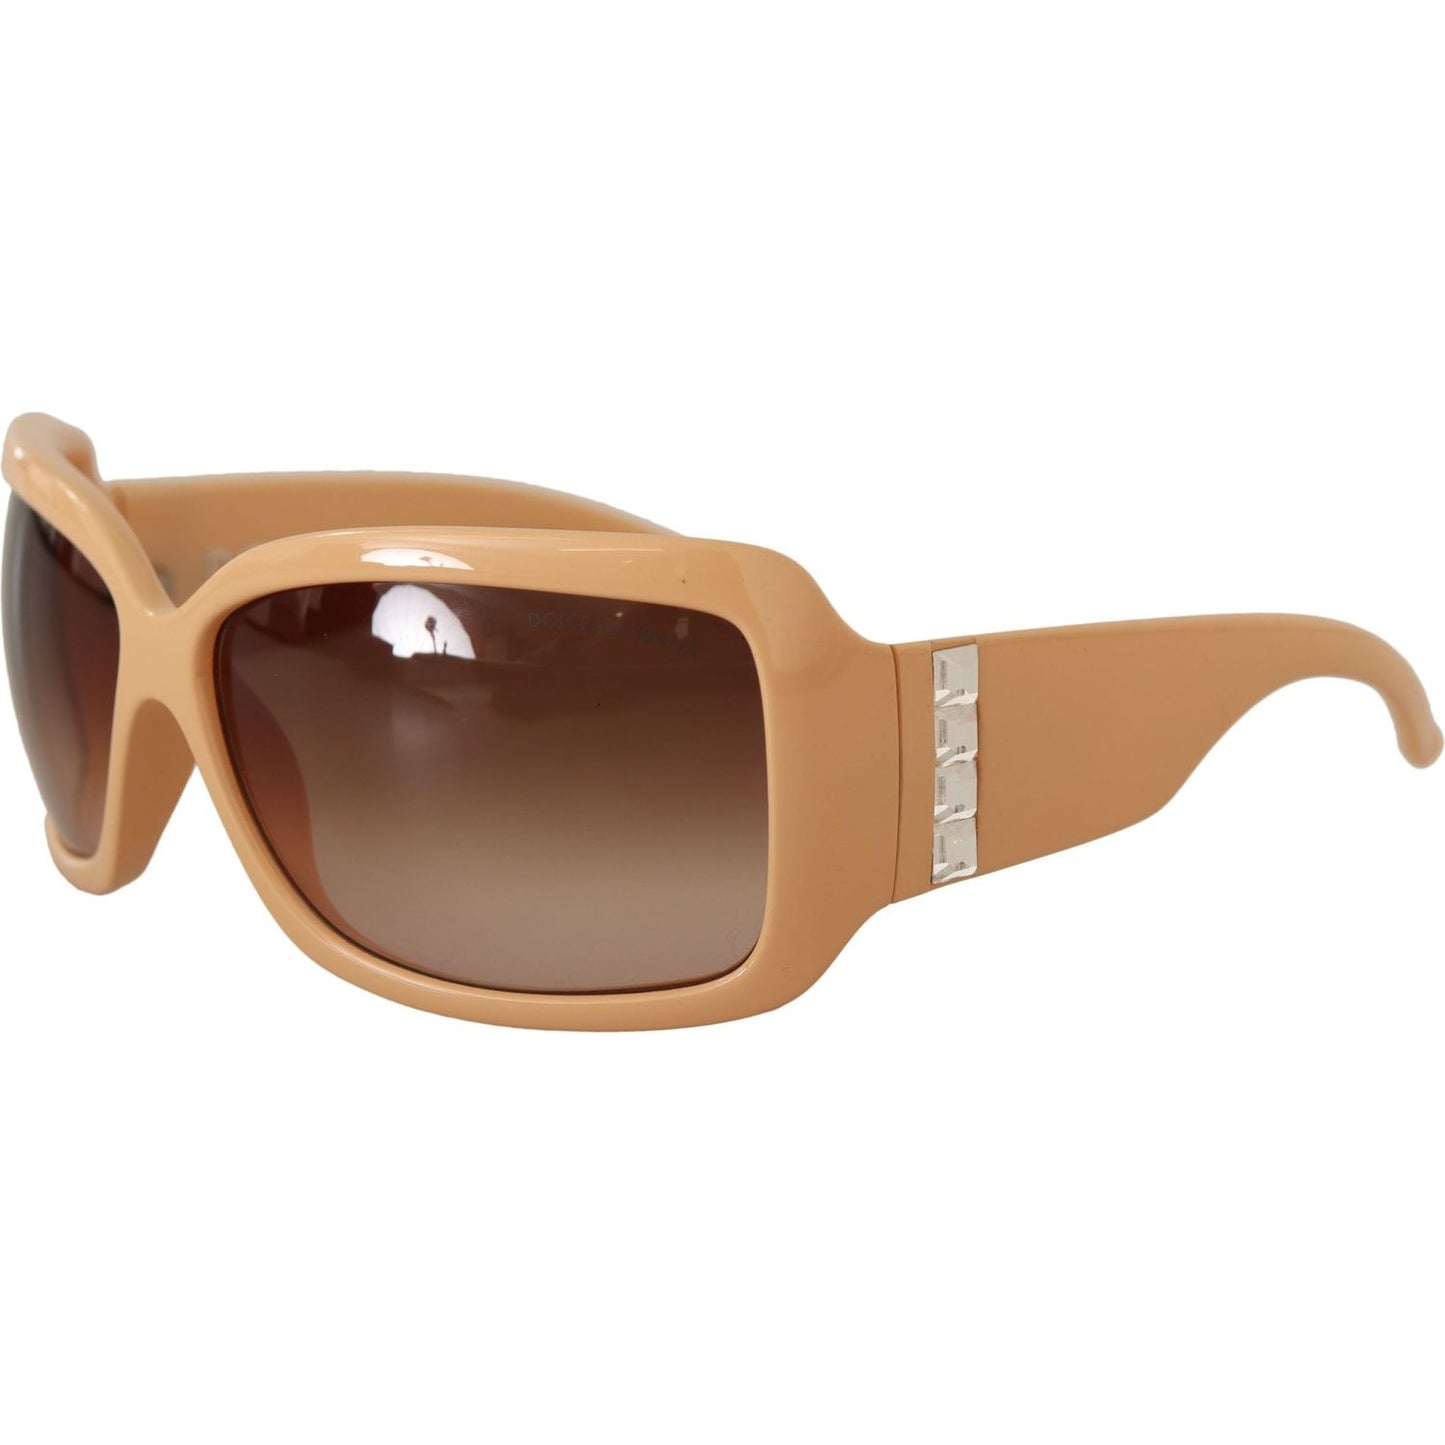 Dolce & Gabbana Chic Beige Urban Jungle Sunglasses for Women WOMAN SUNGLASSES beige-cat-eye-pvc-frame-brown-lenses-shades-sunglasses